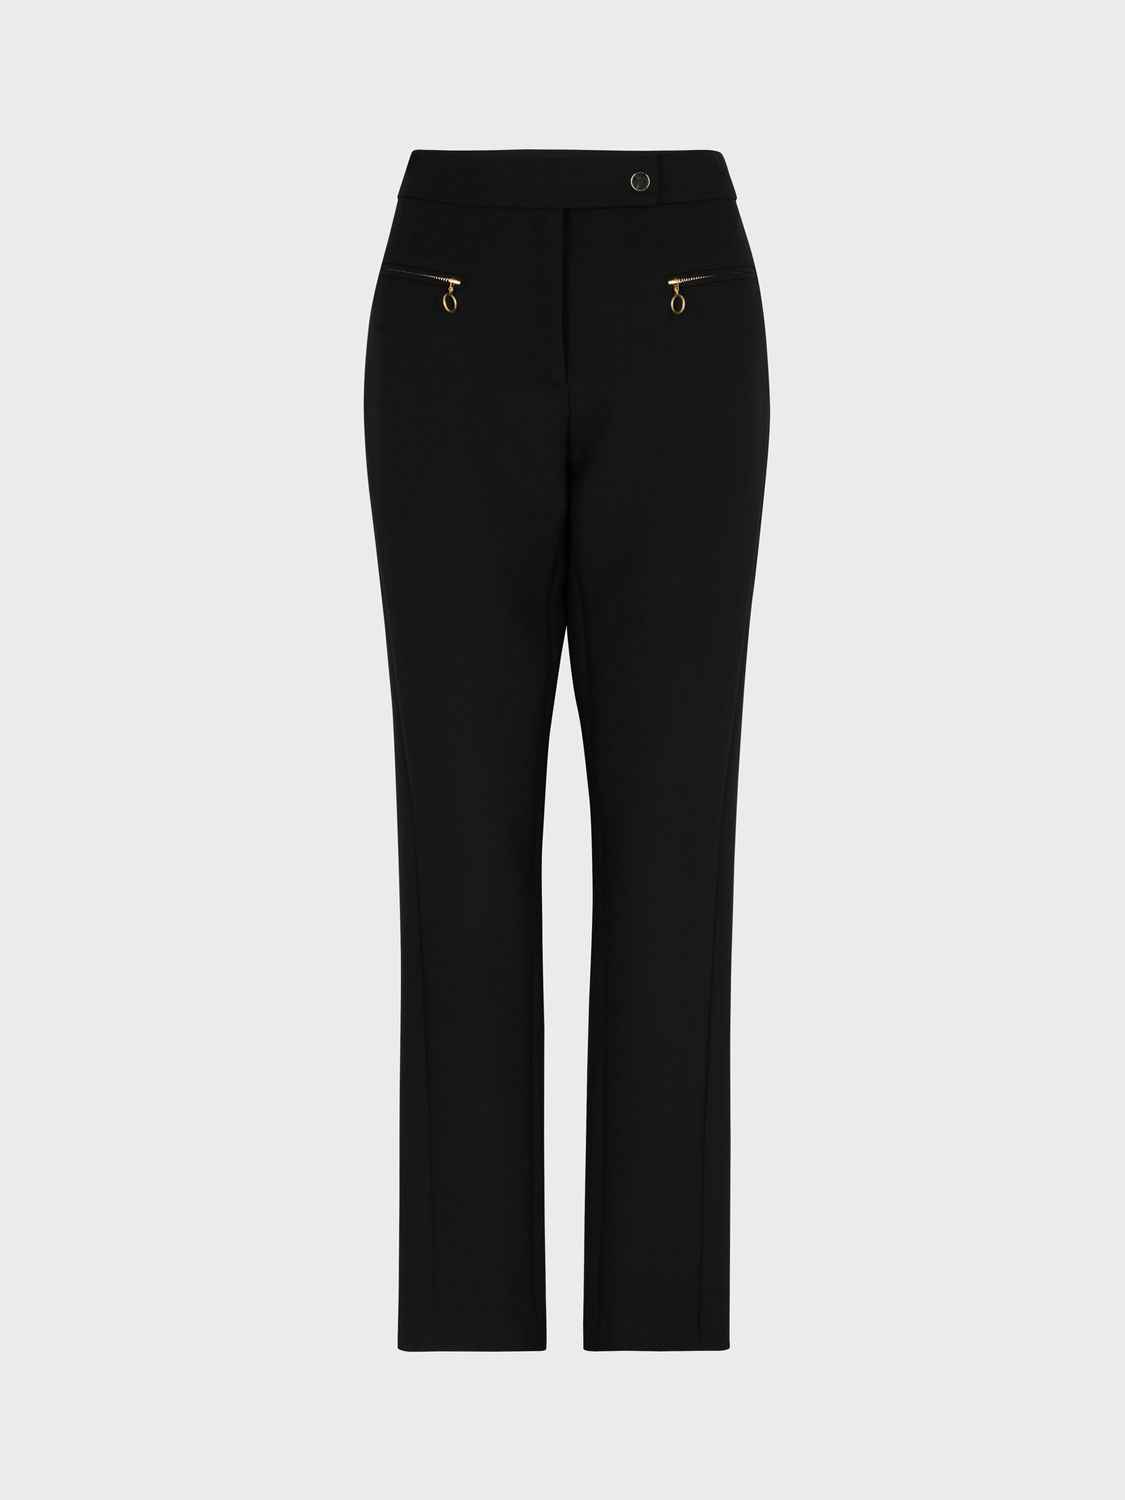 Gerard Darel Edna Tailored Trousers, Black, 6